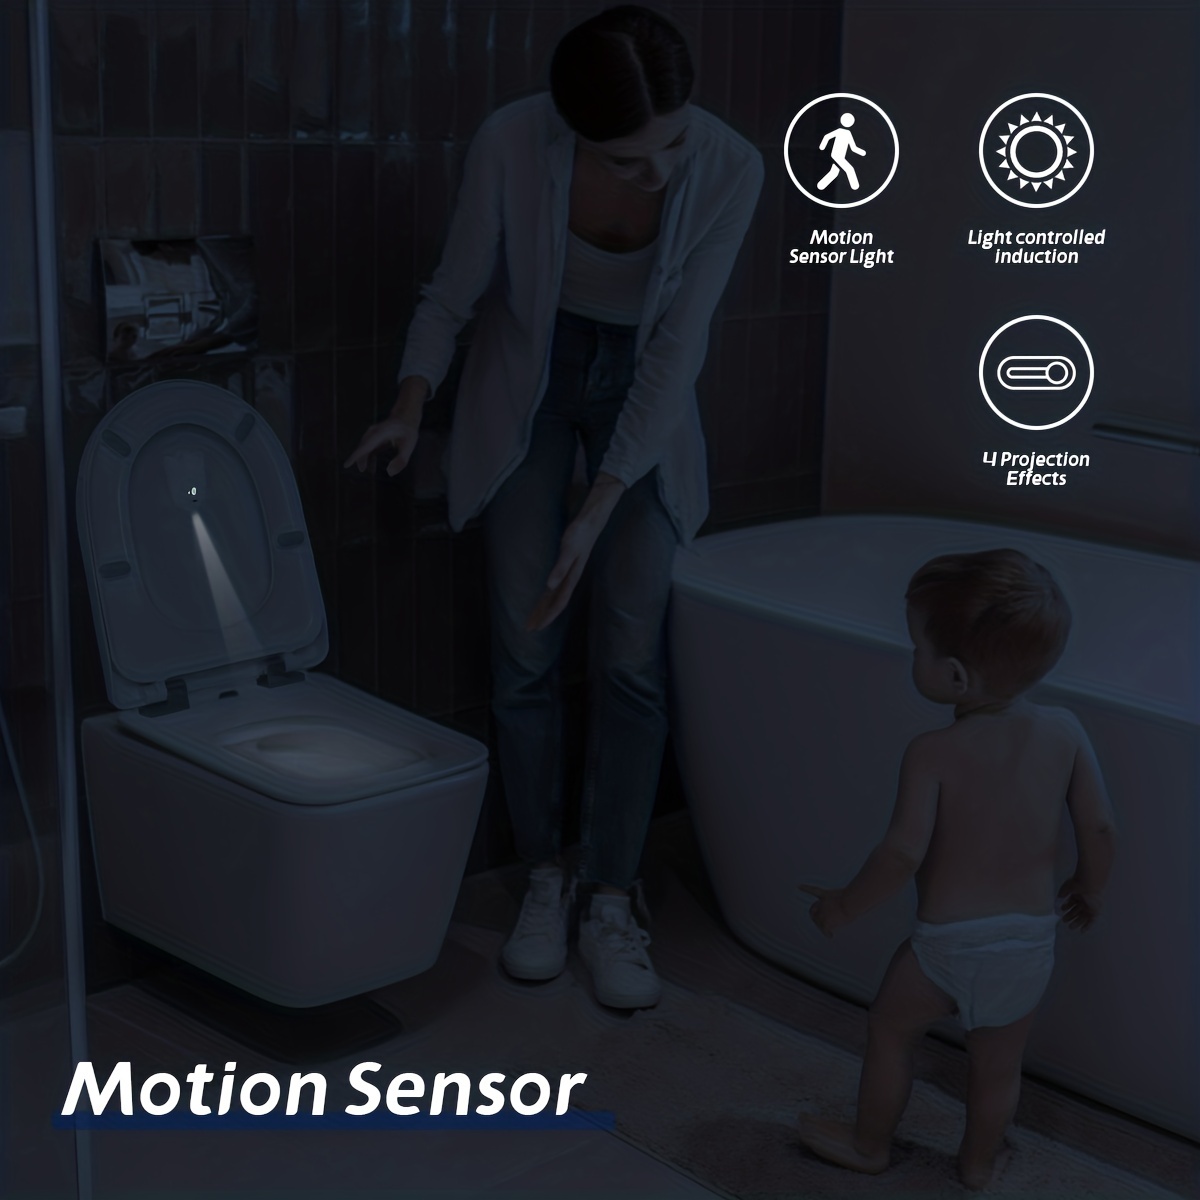 New Creative Toilet Projection Light, Smart Human Sensing Small